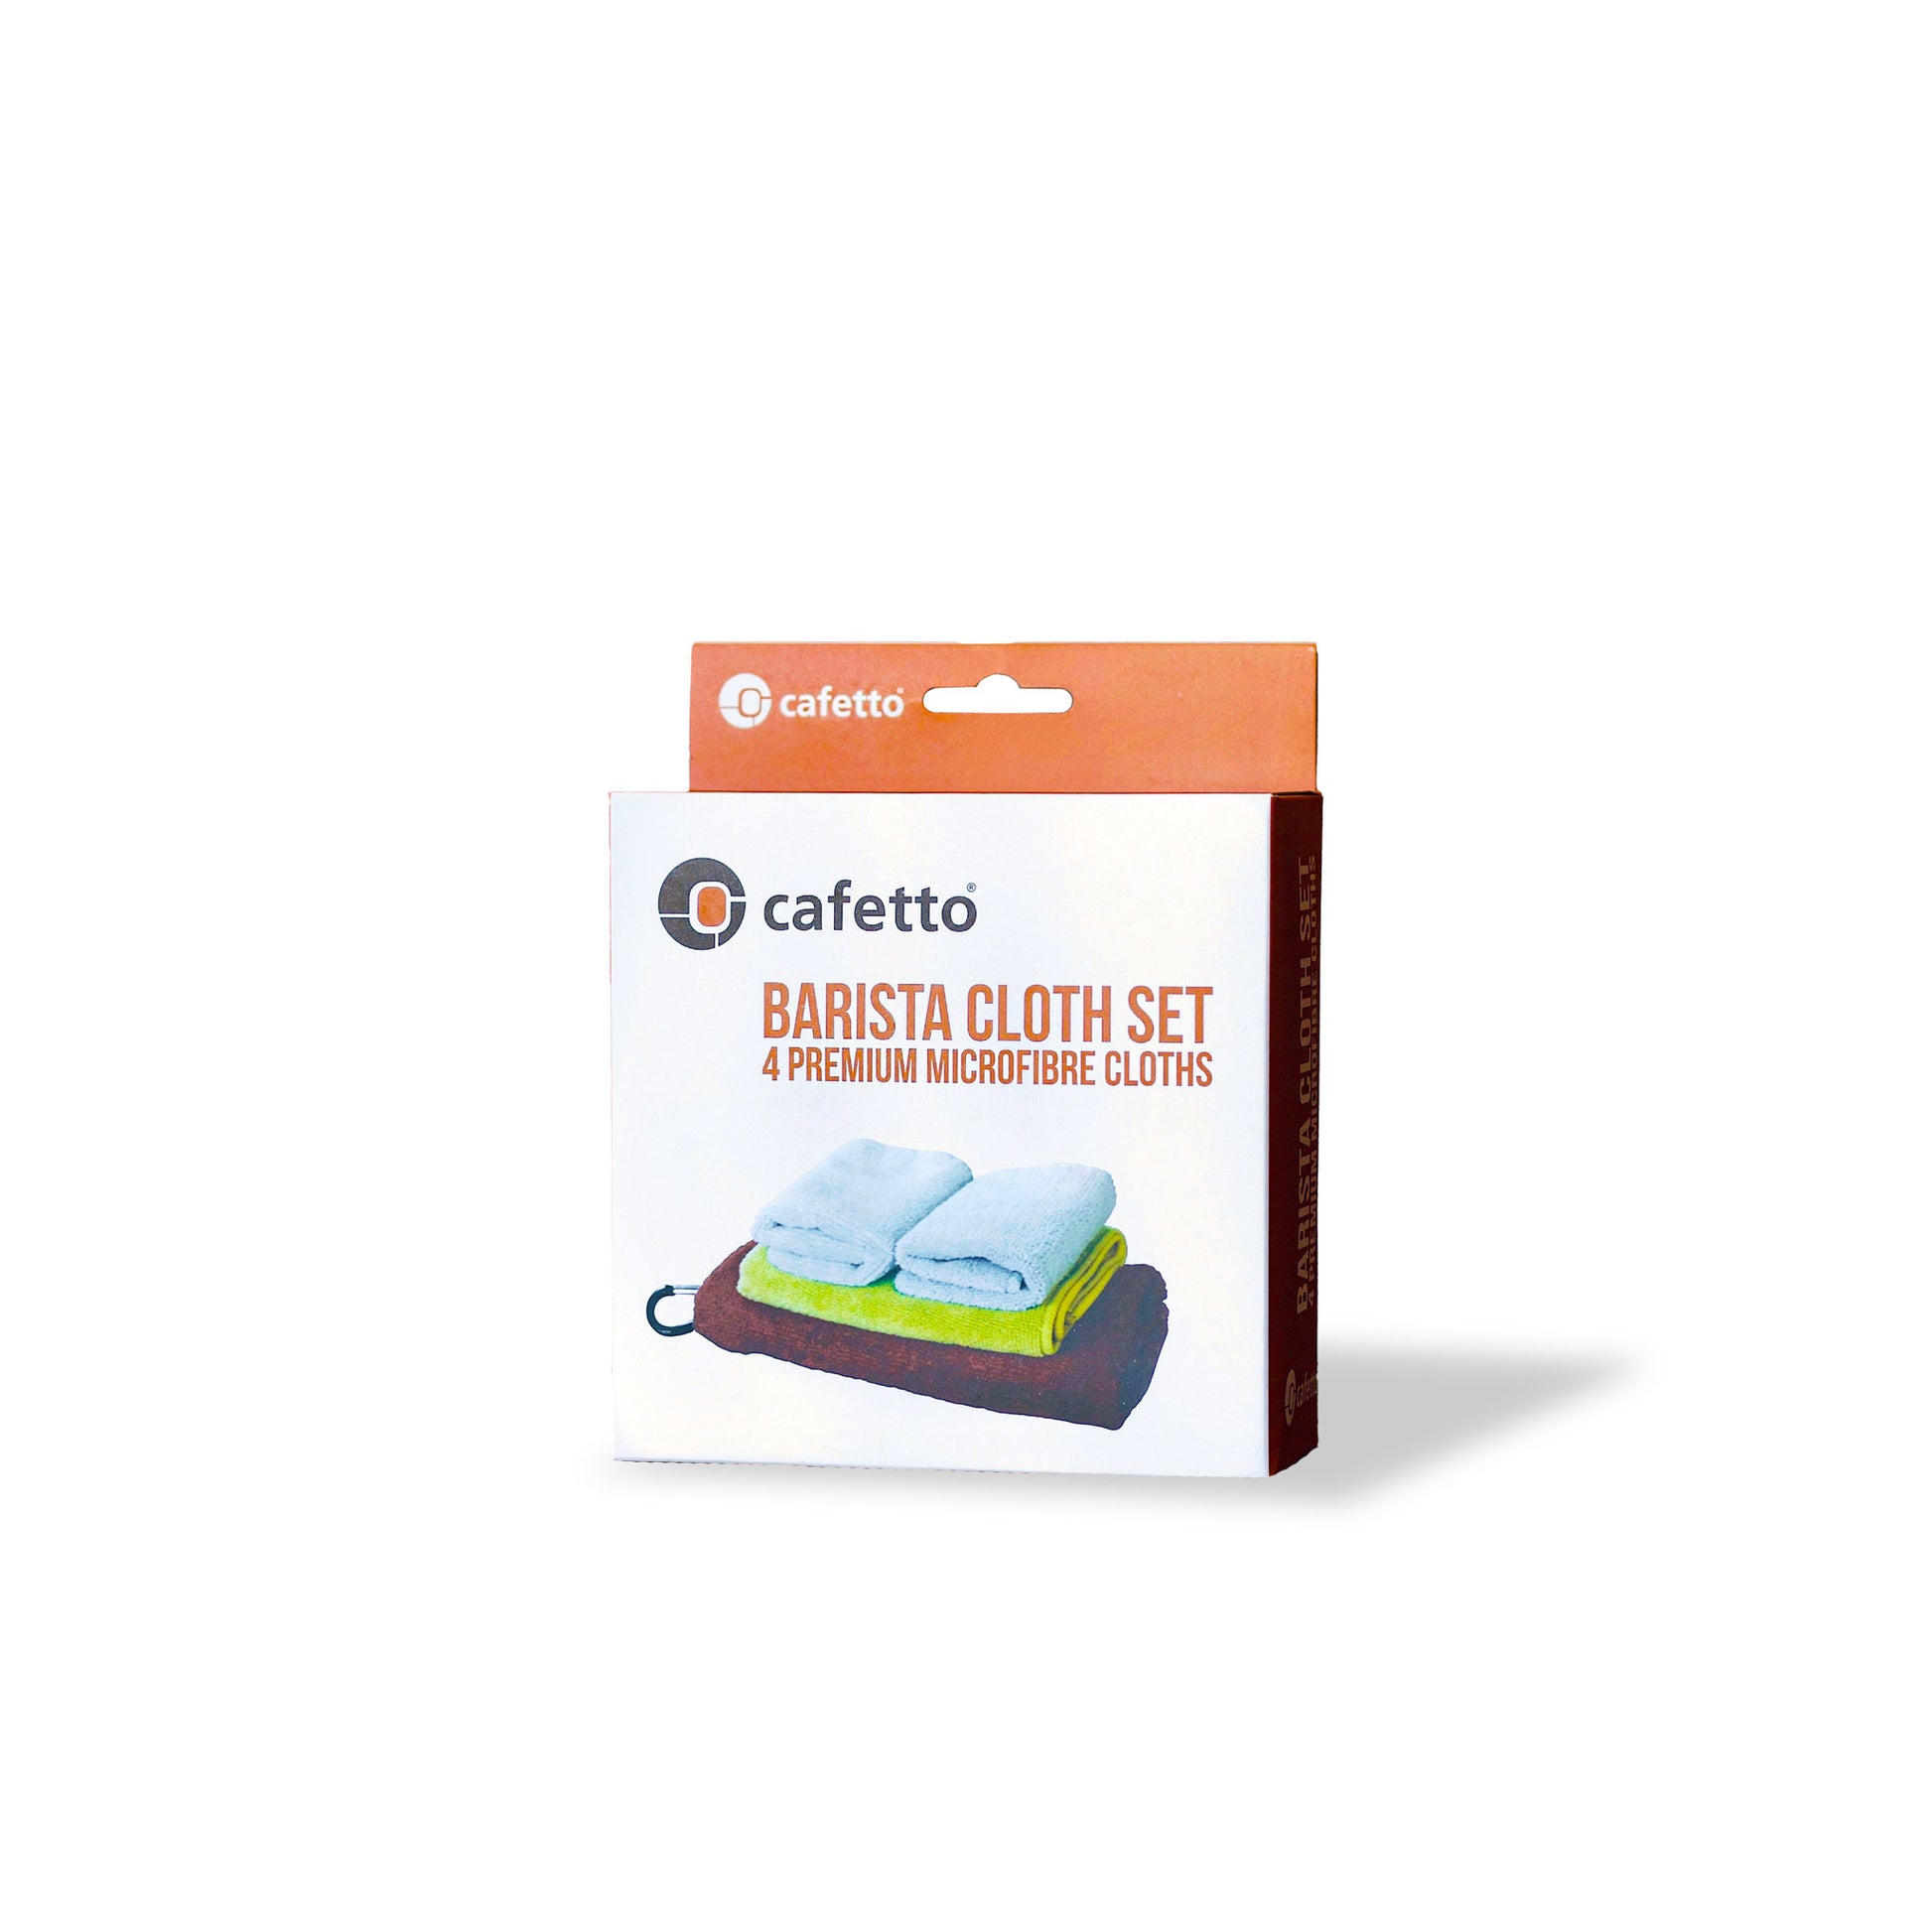 Cafetto Barista Cloth Set - Caffeine Lab